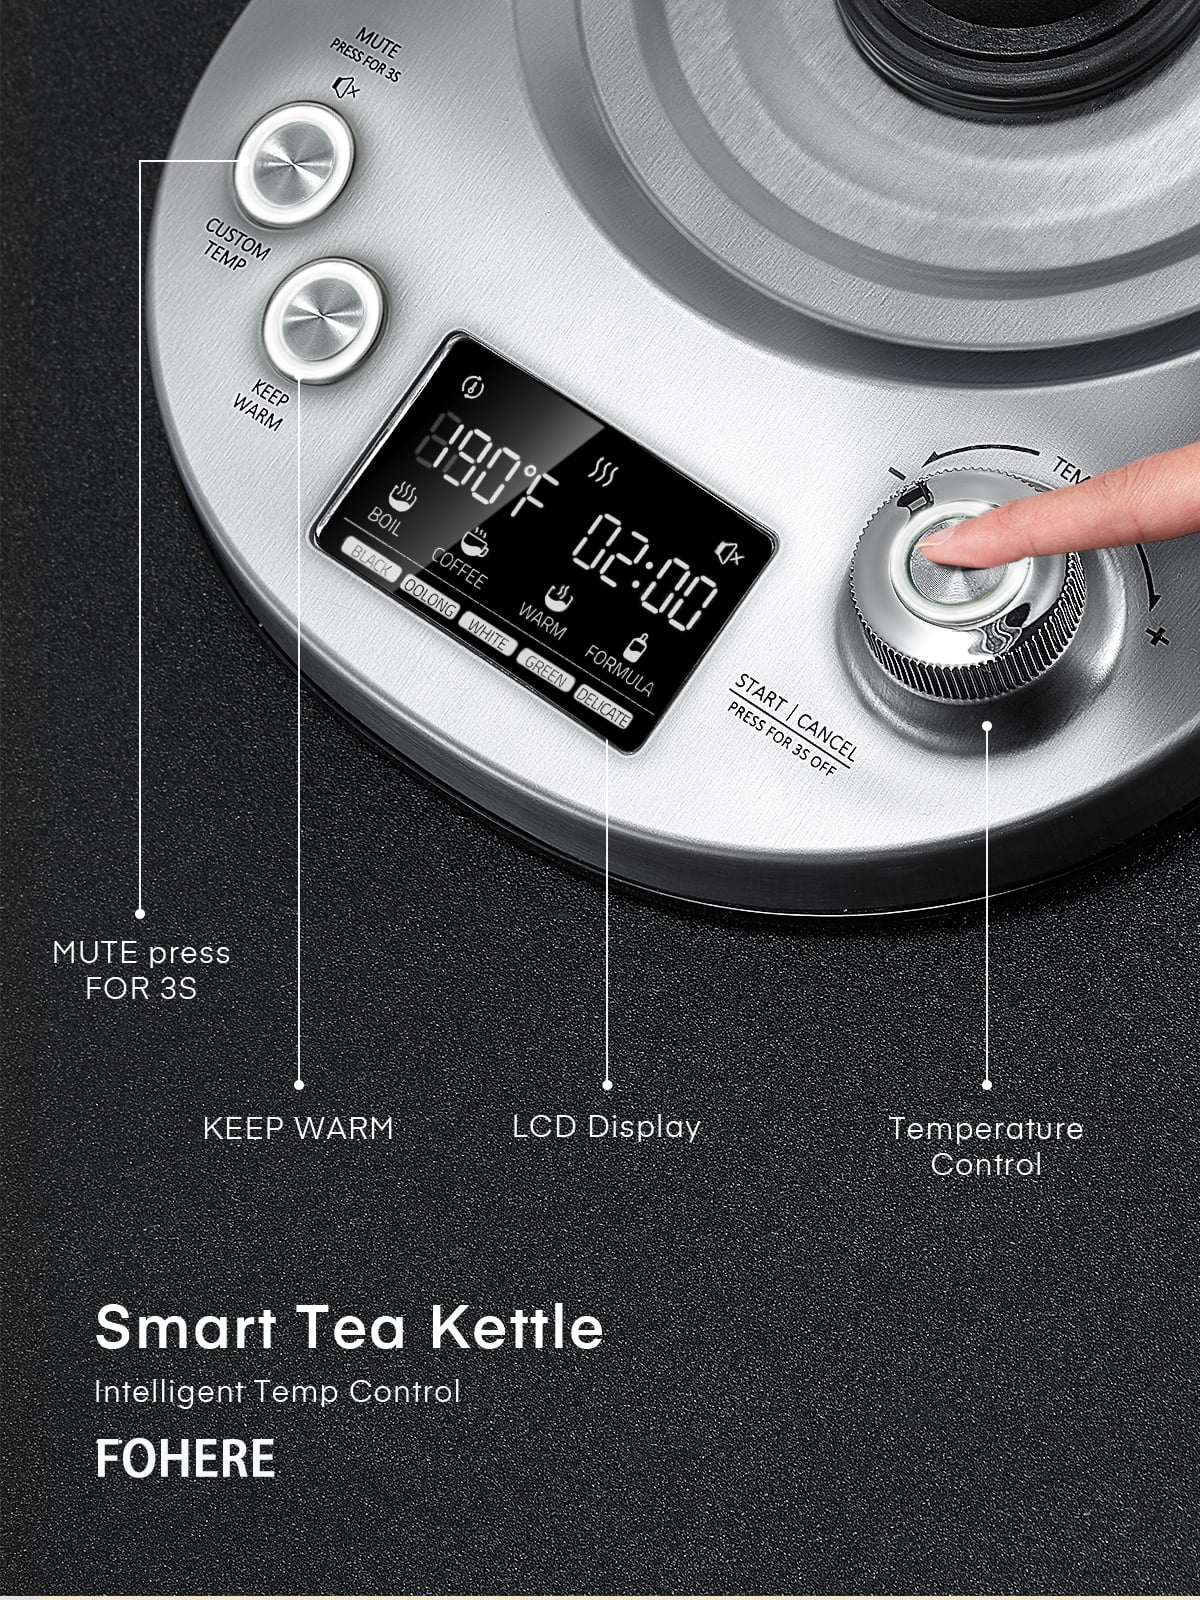 AICOOK Electric Tea Kettle, Electric Kettle Temperature Control